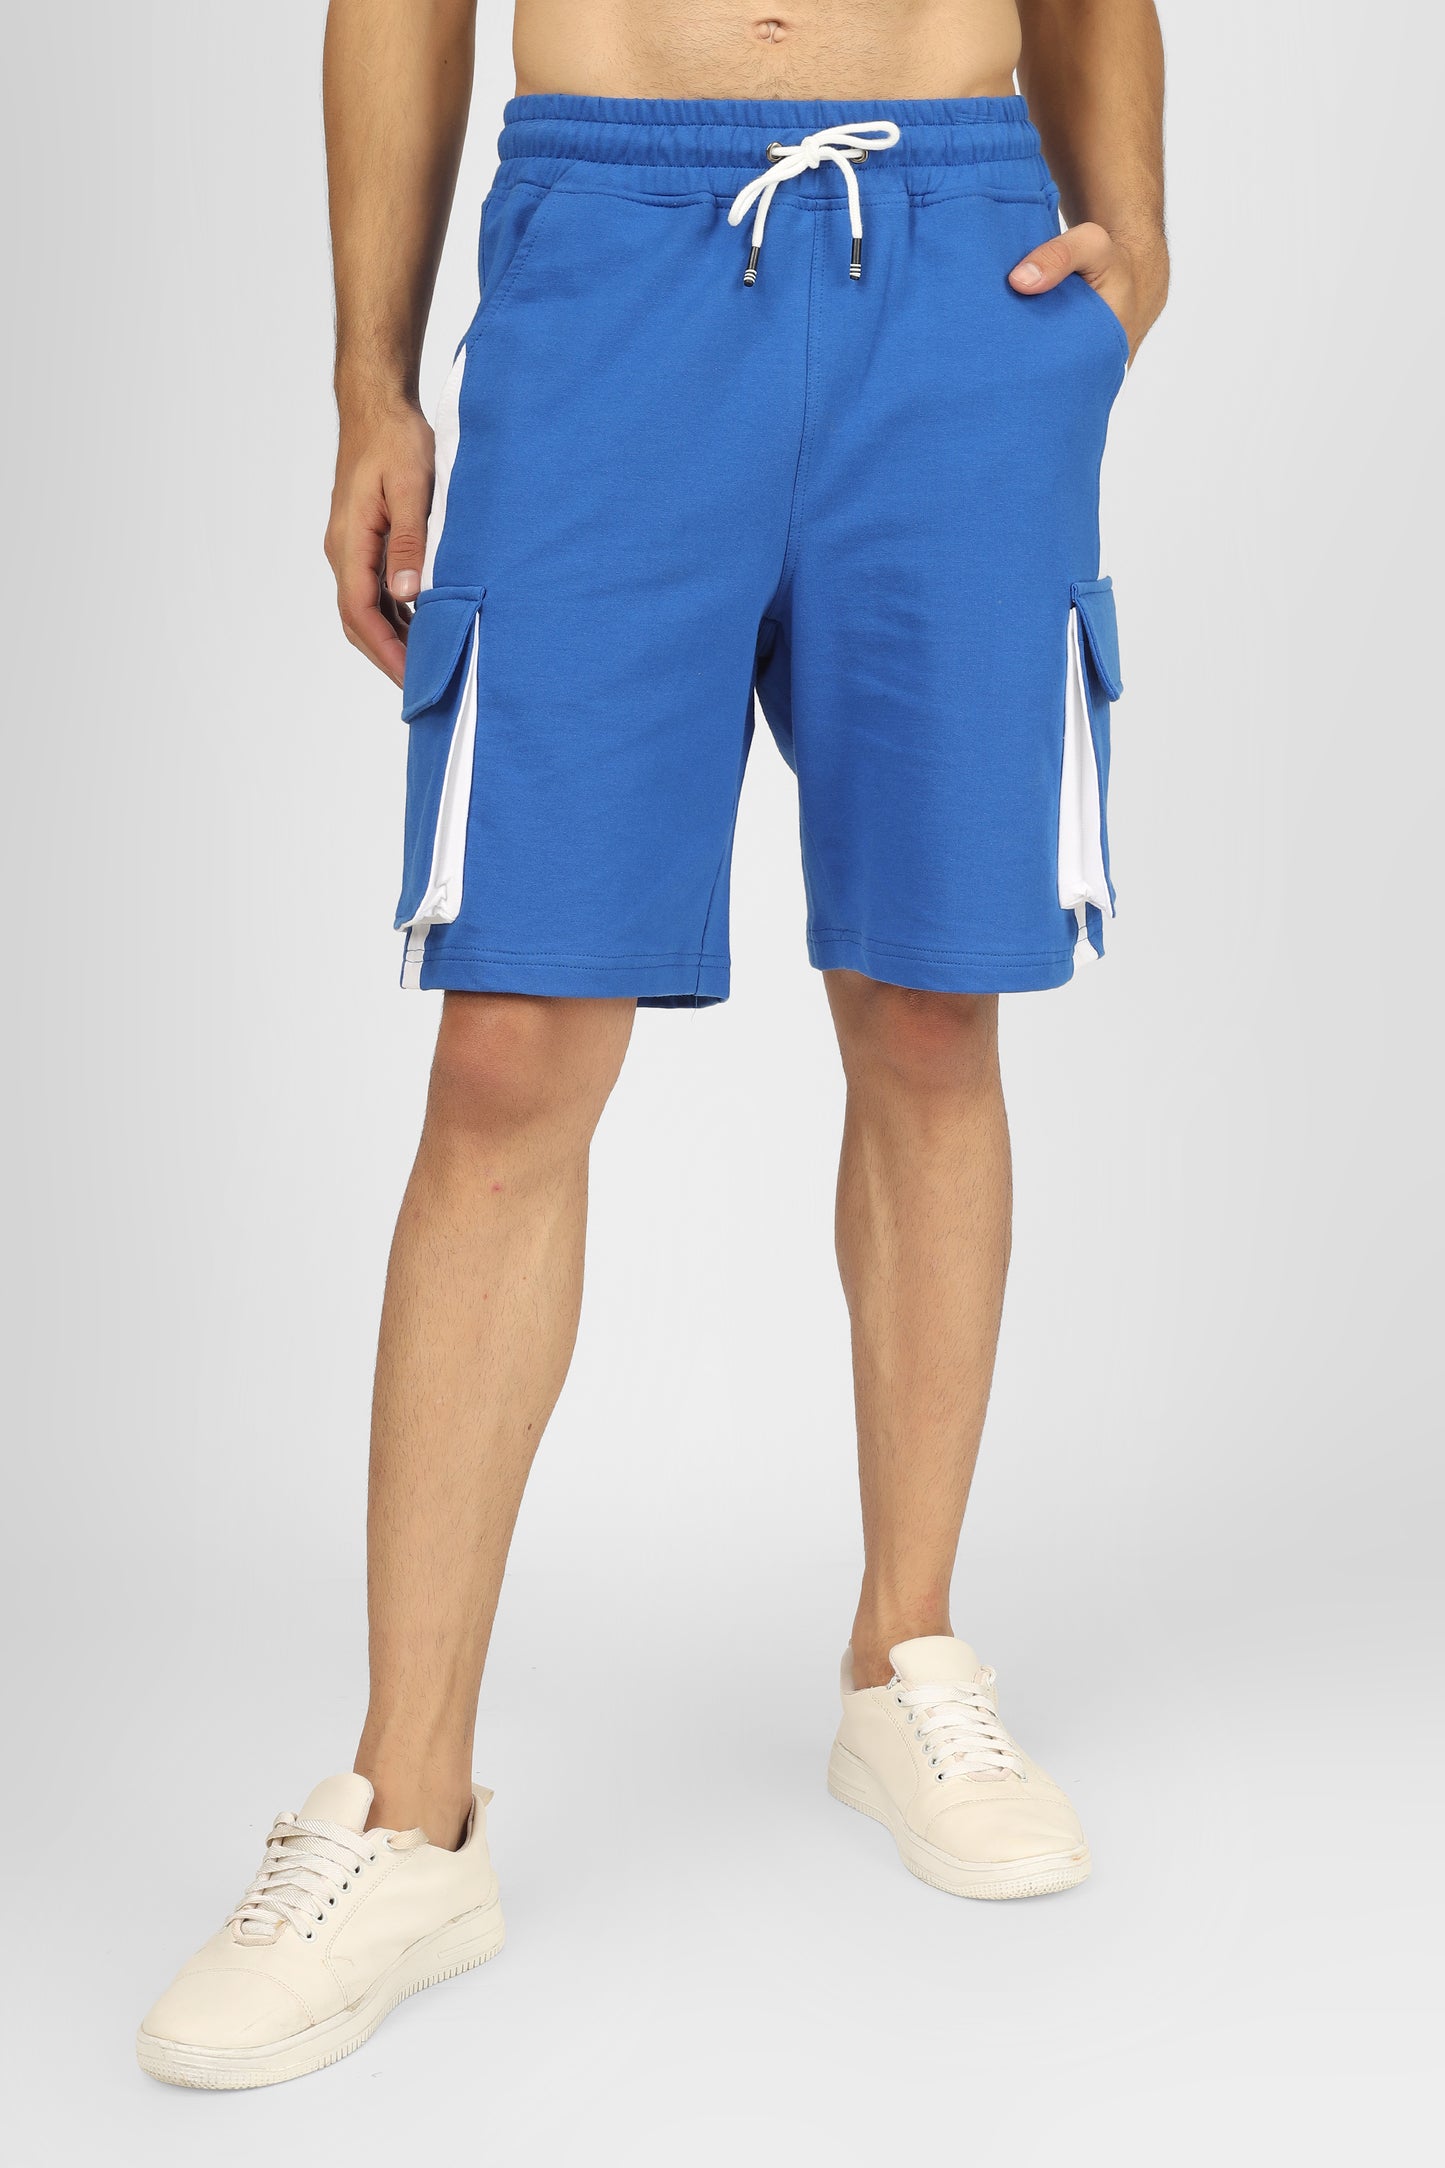 Regular Fit Cargo Shorts (Royal Blue & White) - Wearduds